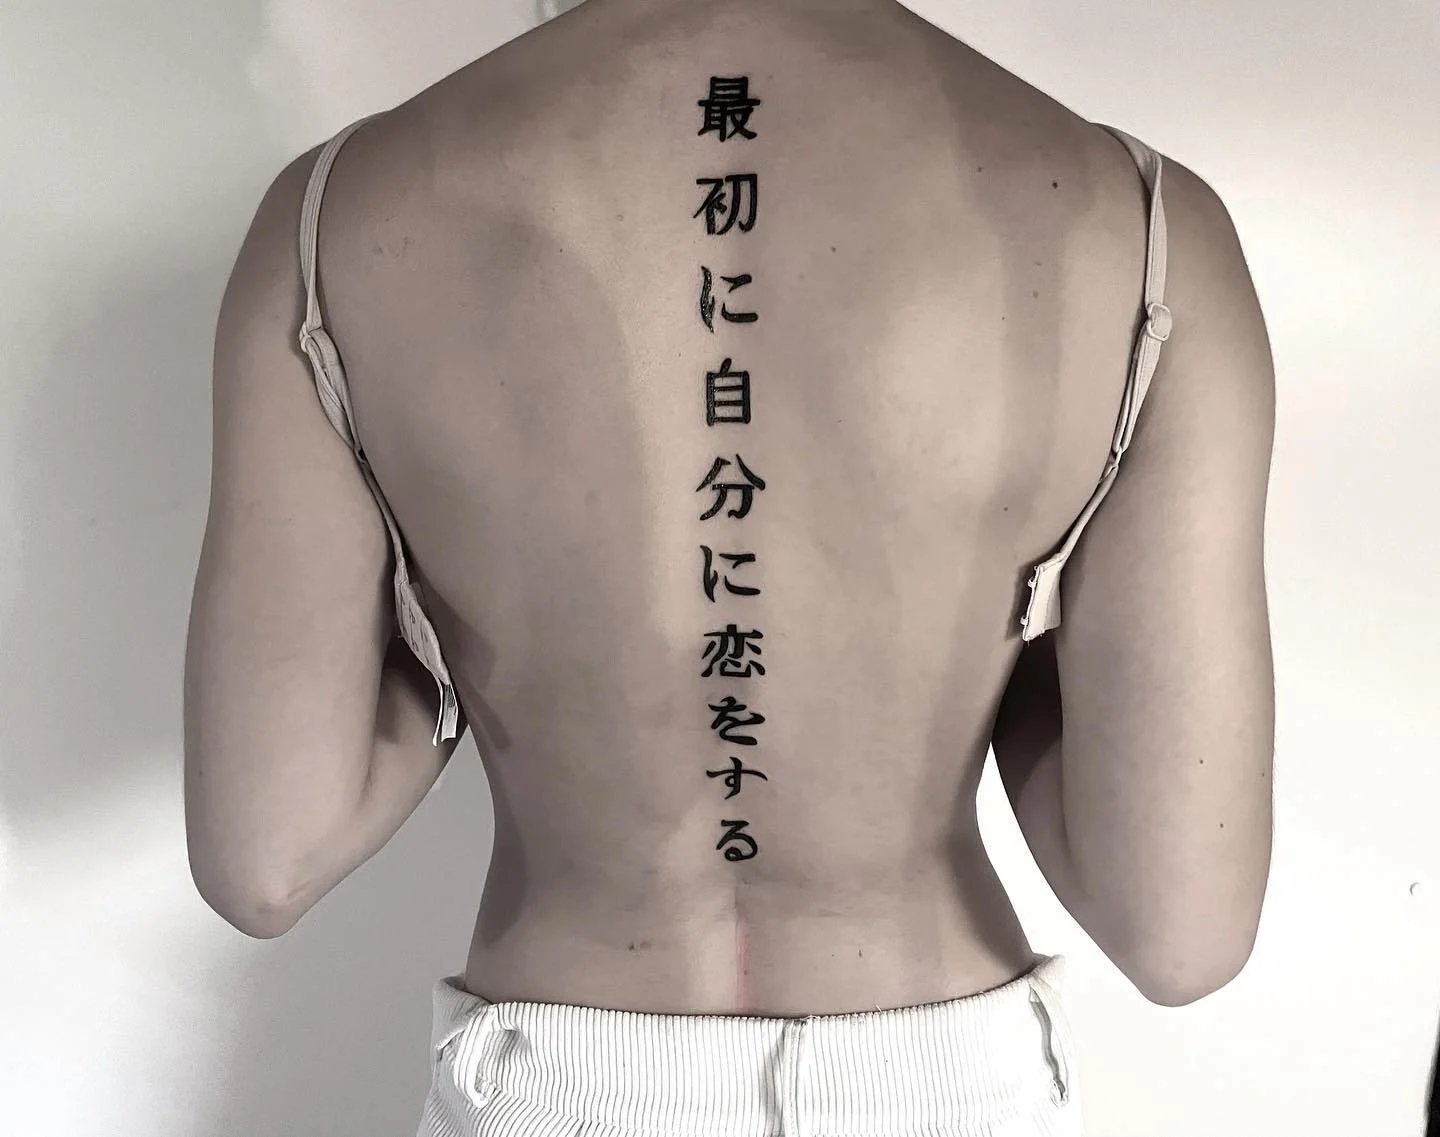 Tatuaje de letras japonesas mujer